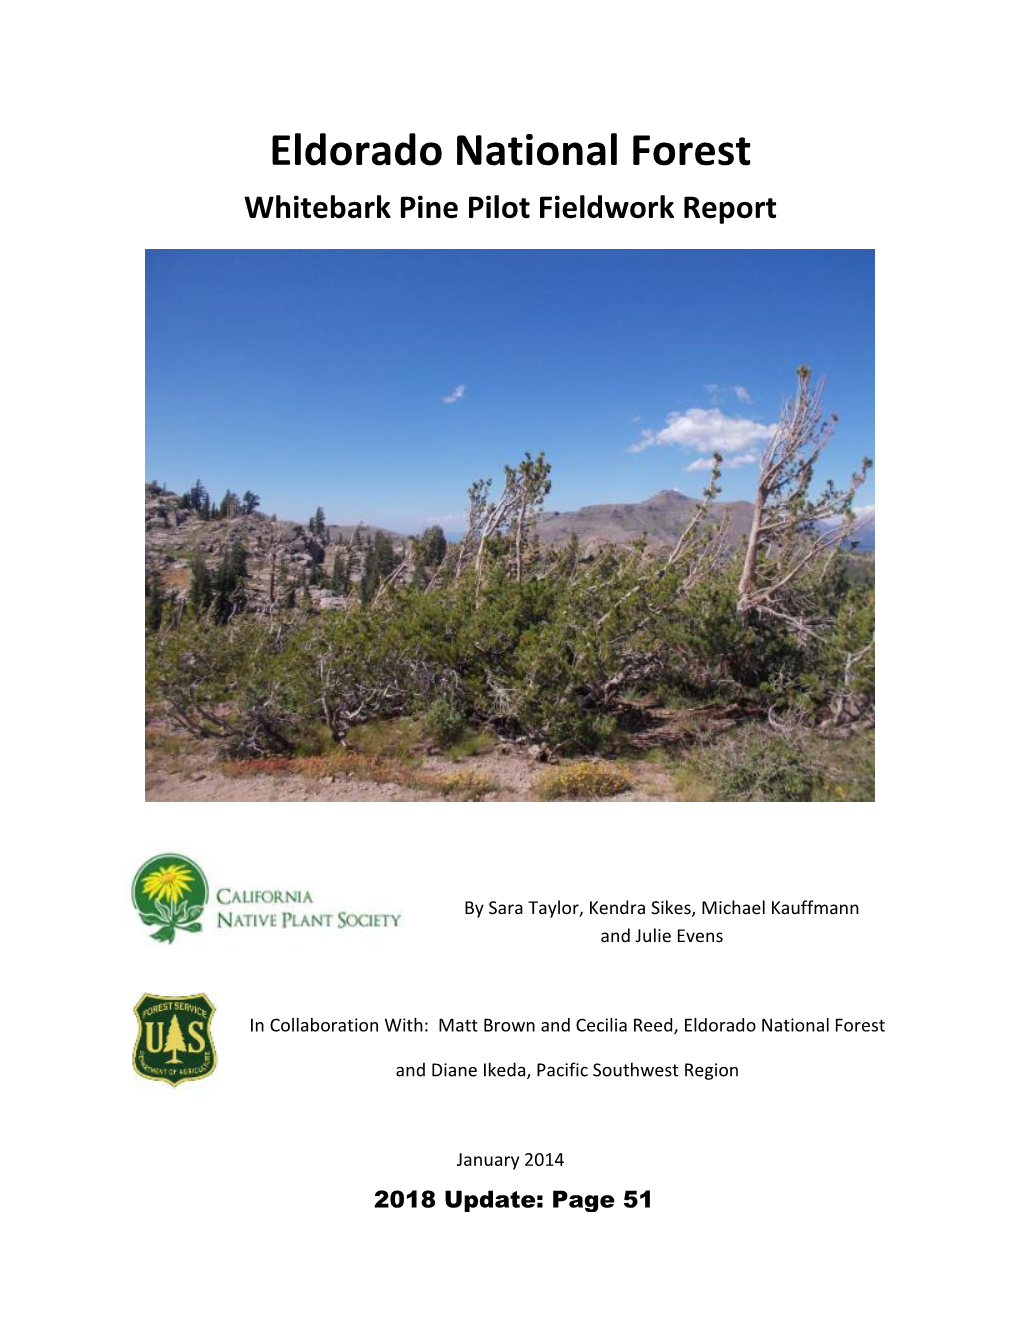 Eldorado National Forest Whitebark Pine Pilot Fieldwork Report